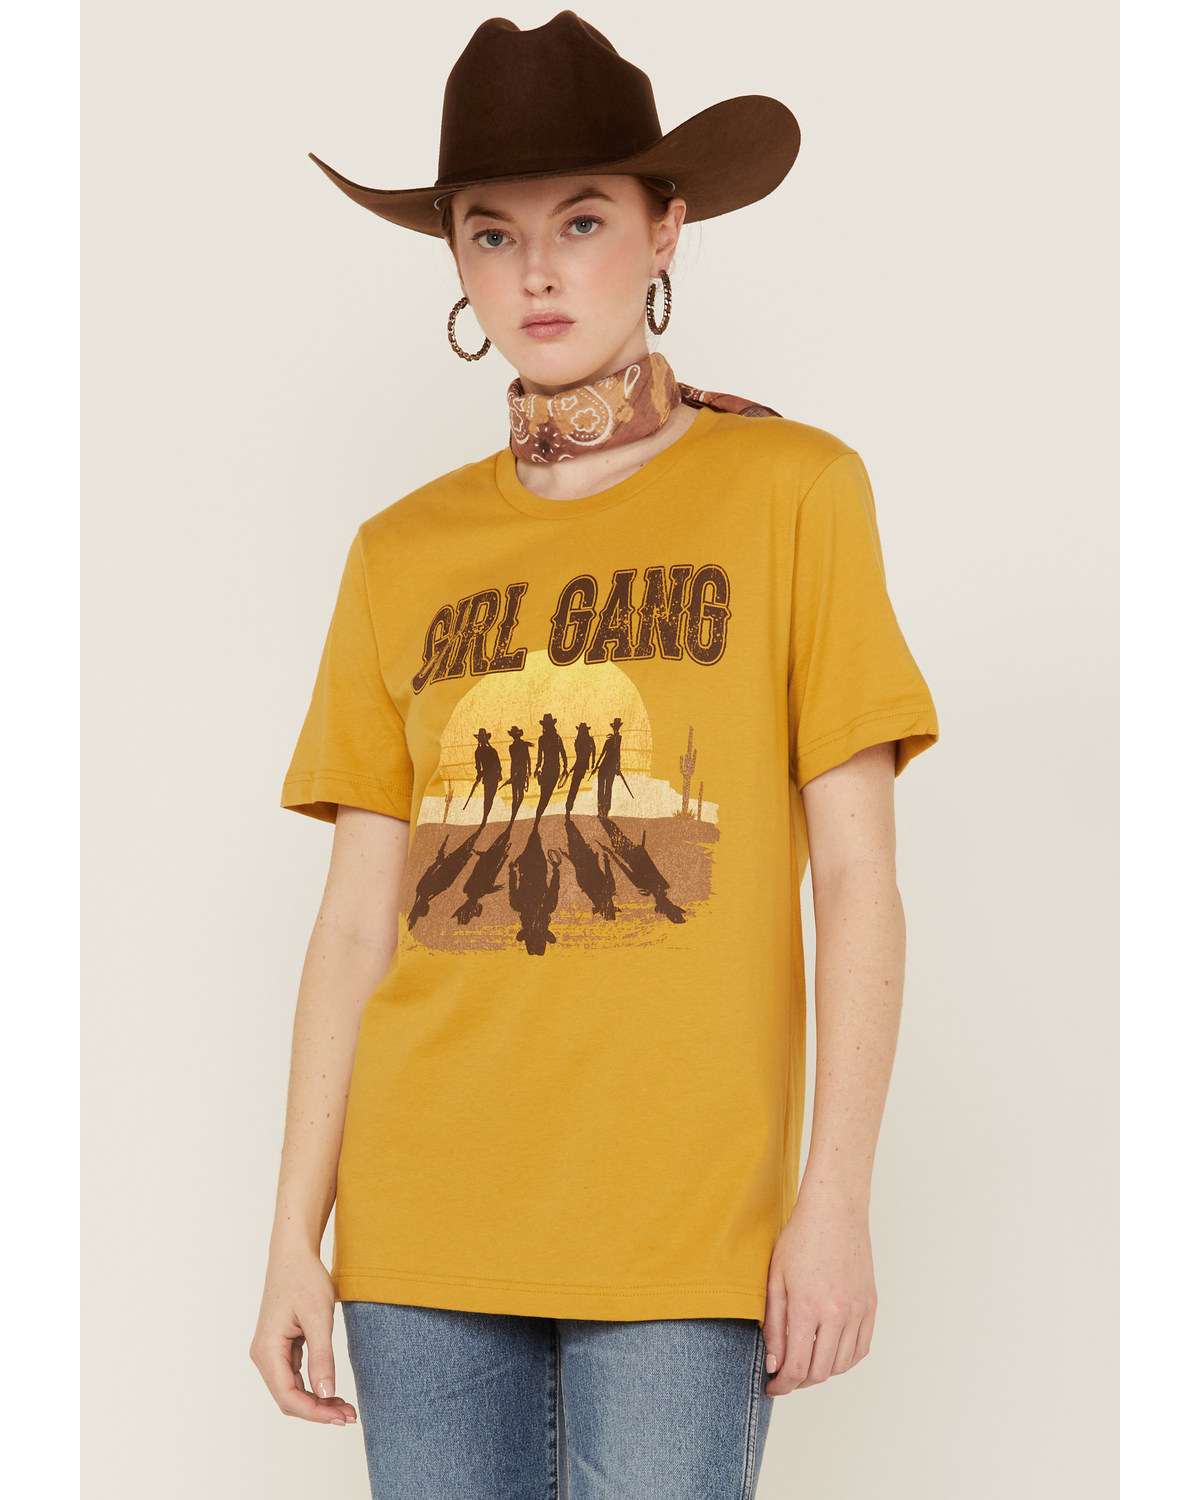 Goodie Two Sleeves Women's Girl Gang Sunset Mustard  Tee